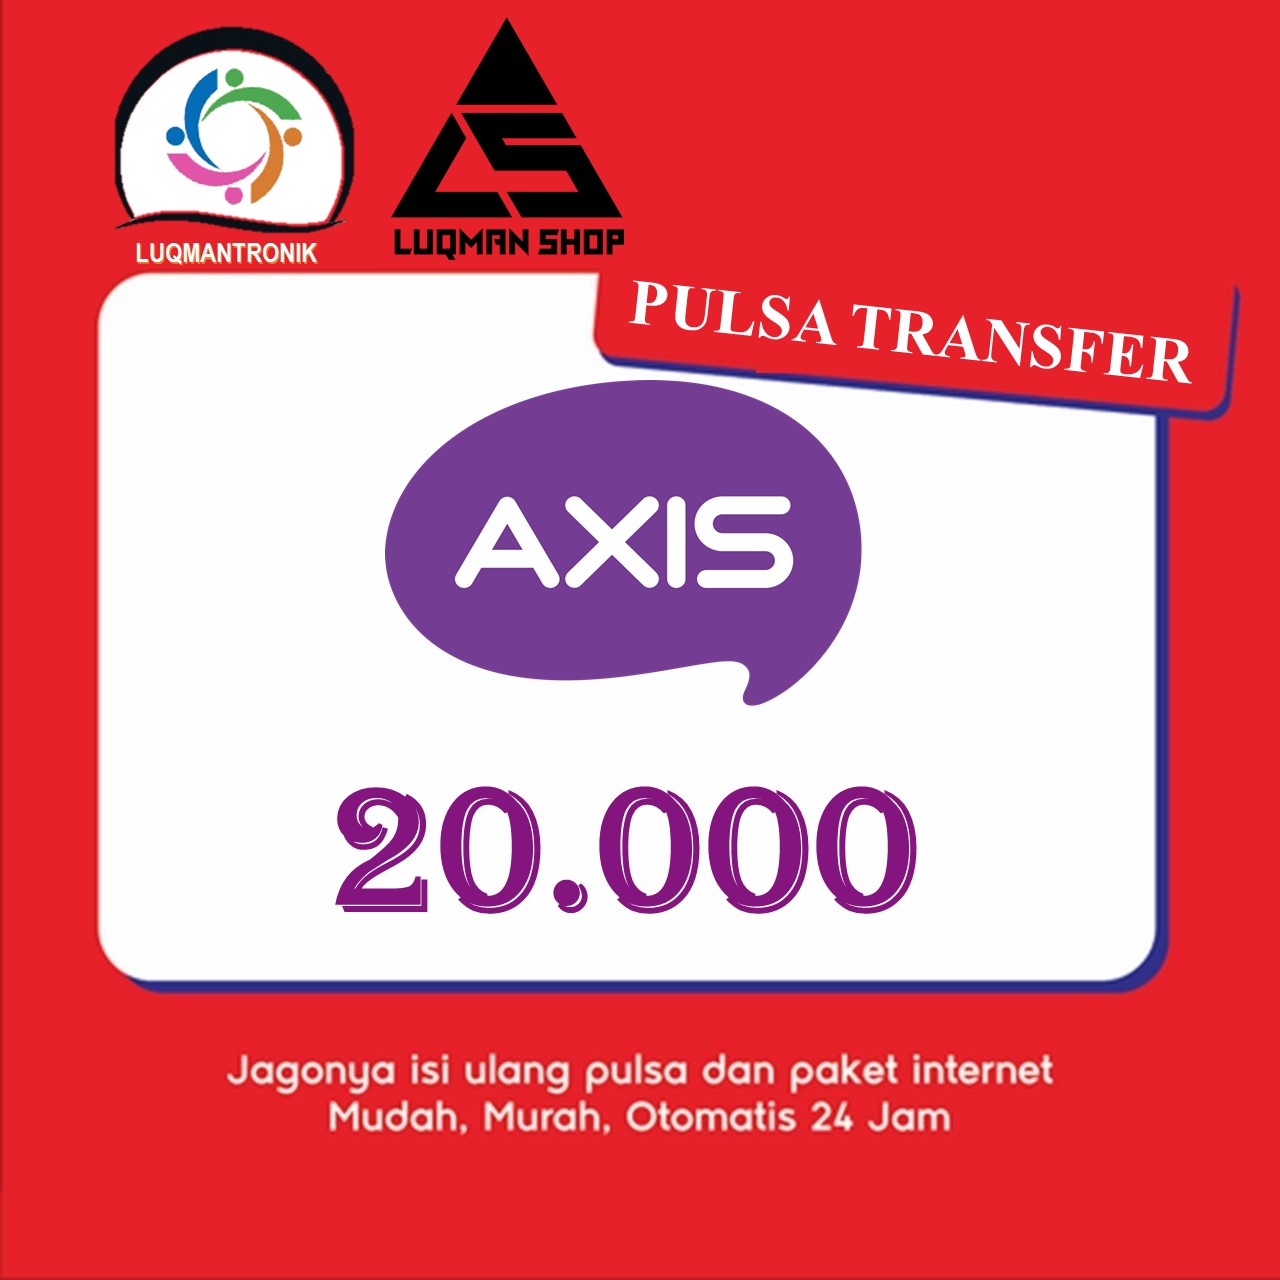 PULSA TRANSFER AXIS - PULSA TRANSFER AXIS 20.000